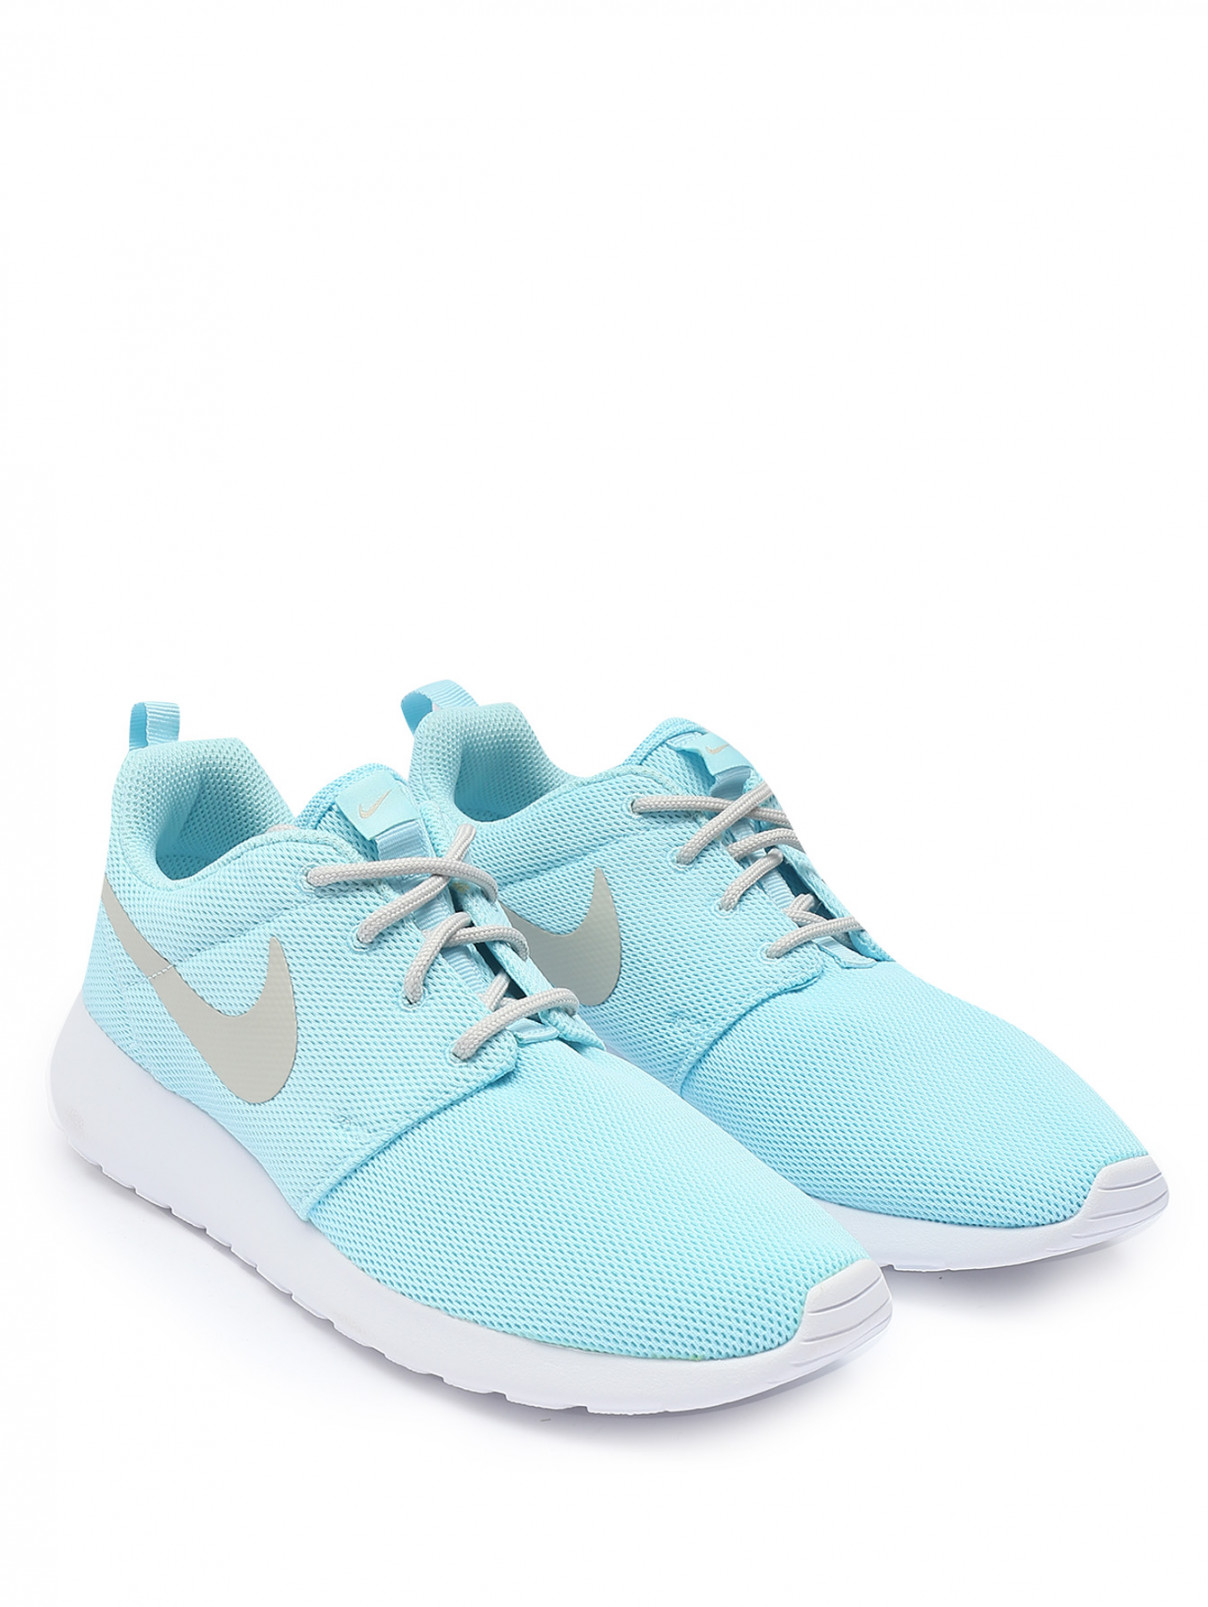 Кроссовки из текстиля с логотипом Nike  –  Общий вид  – Цвет:  Синий